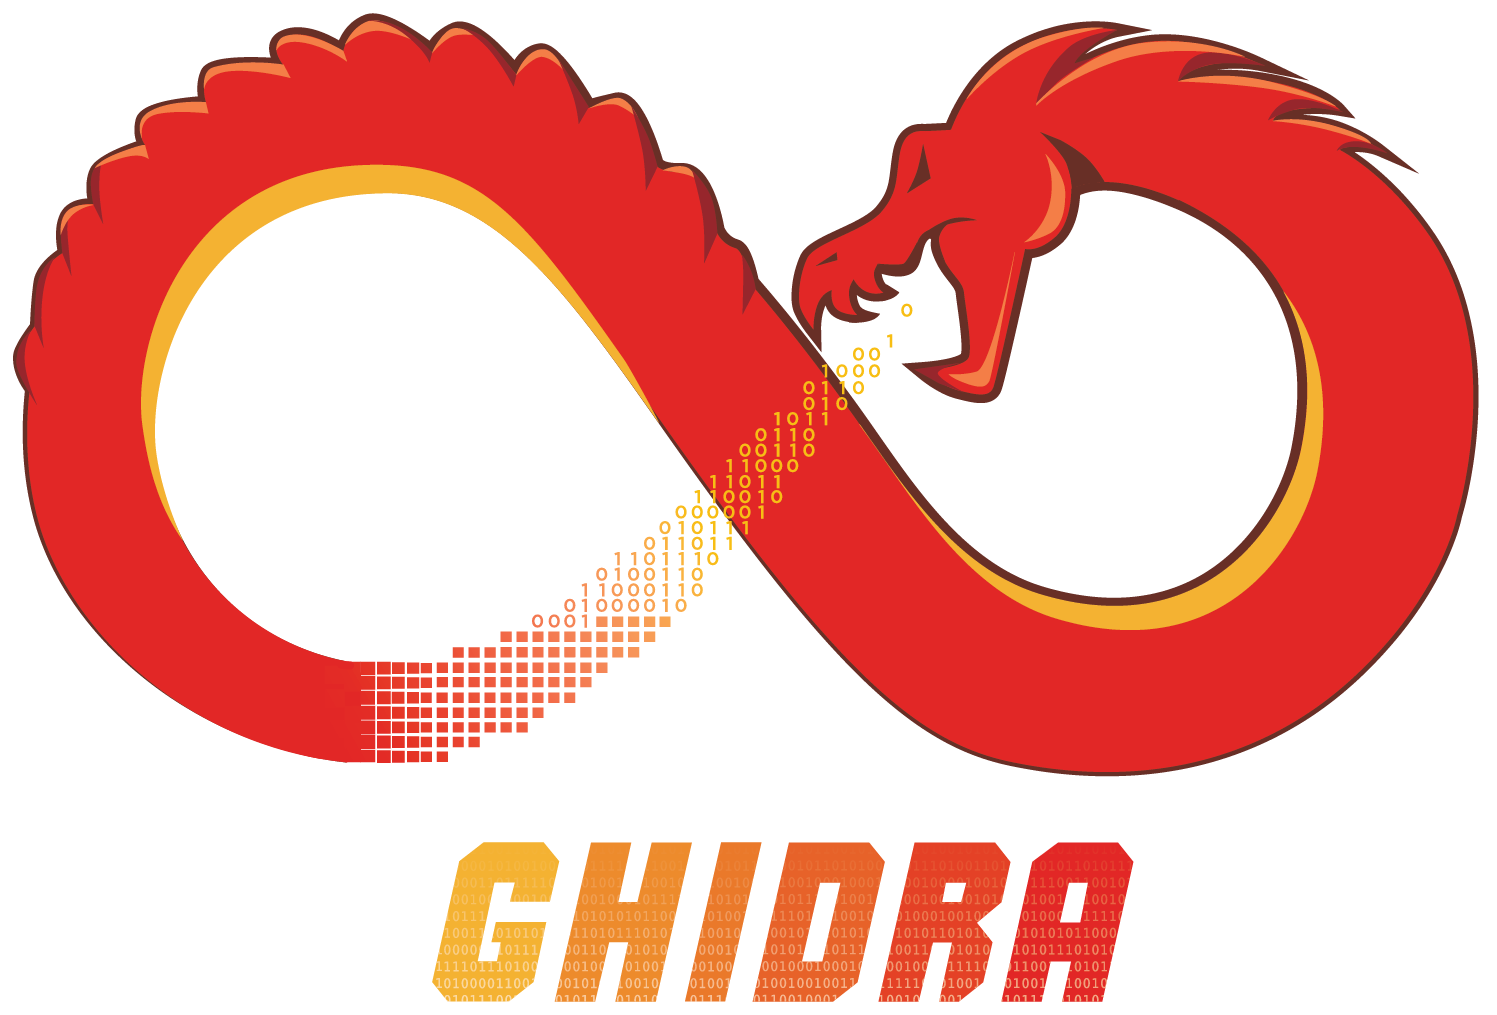 Ghidra logo